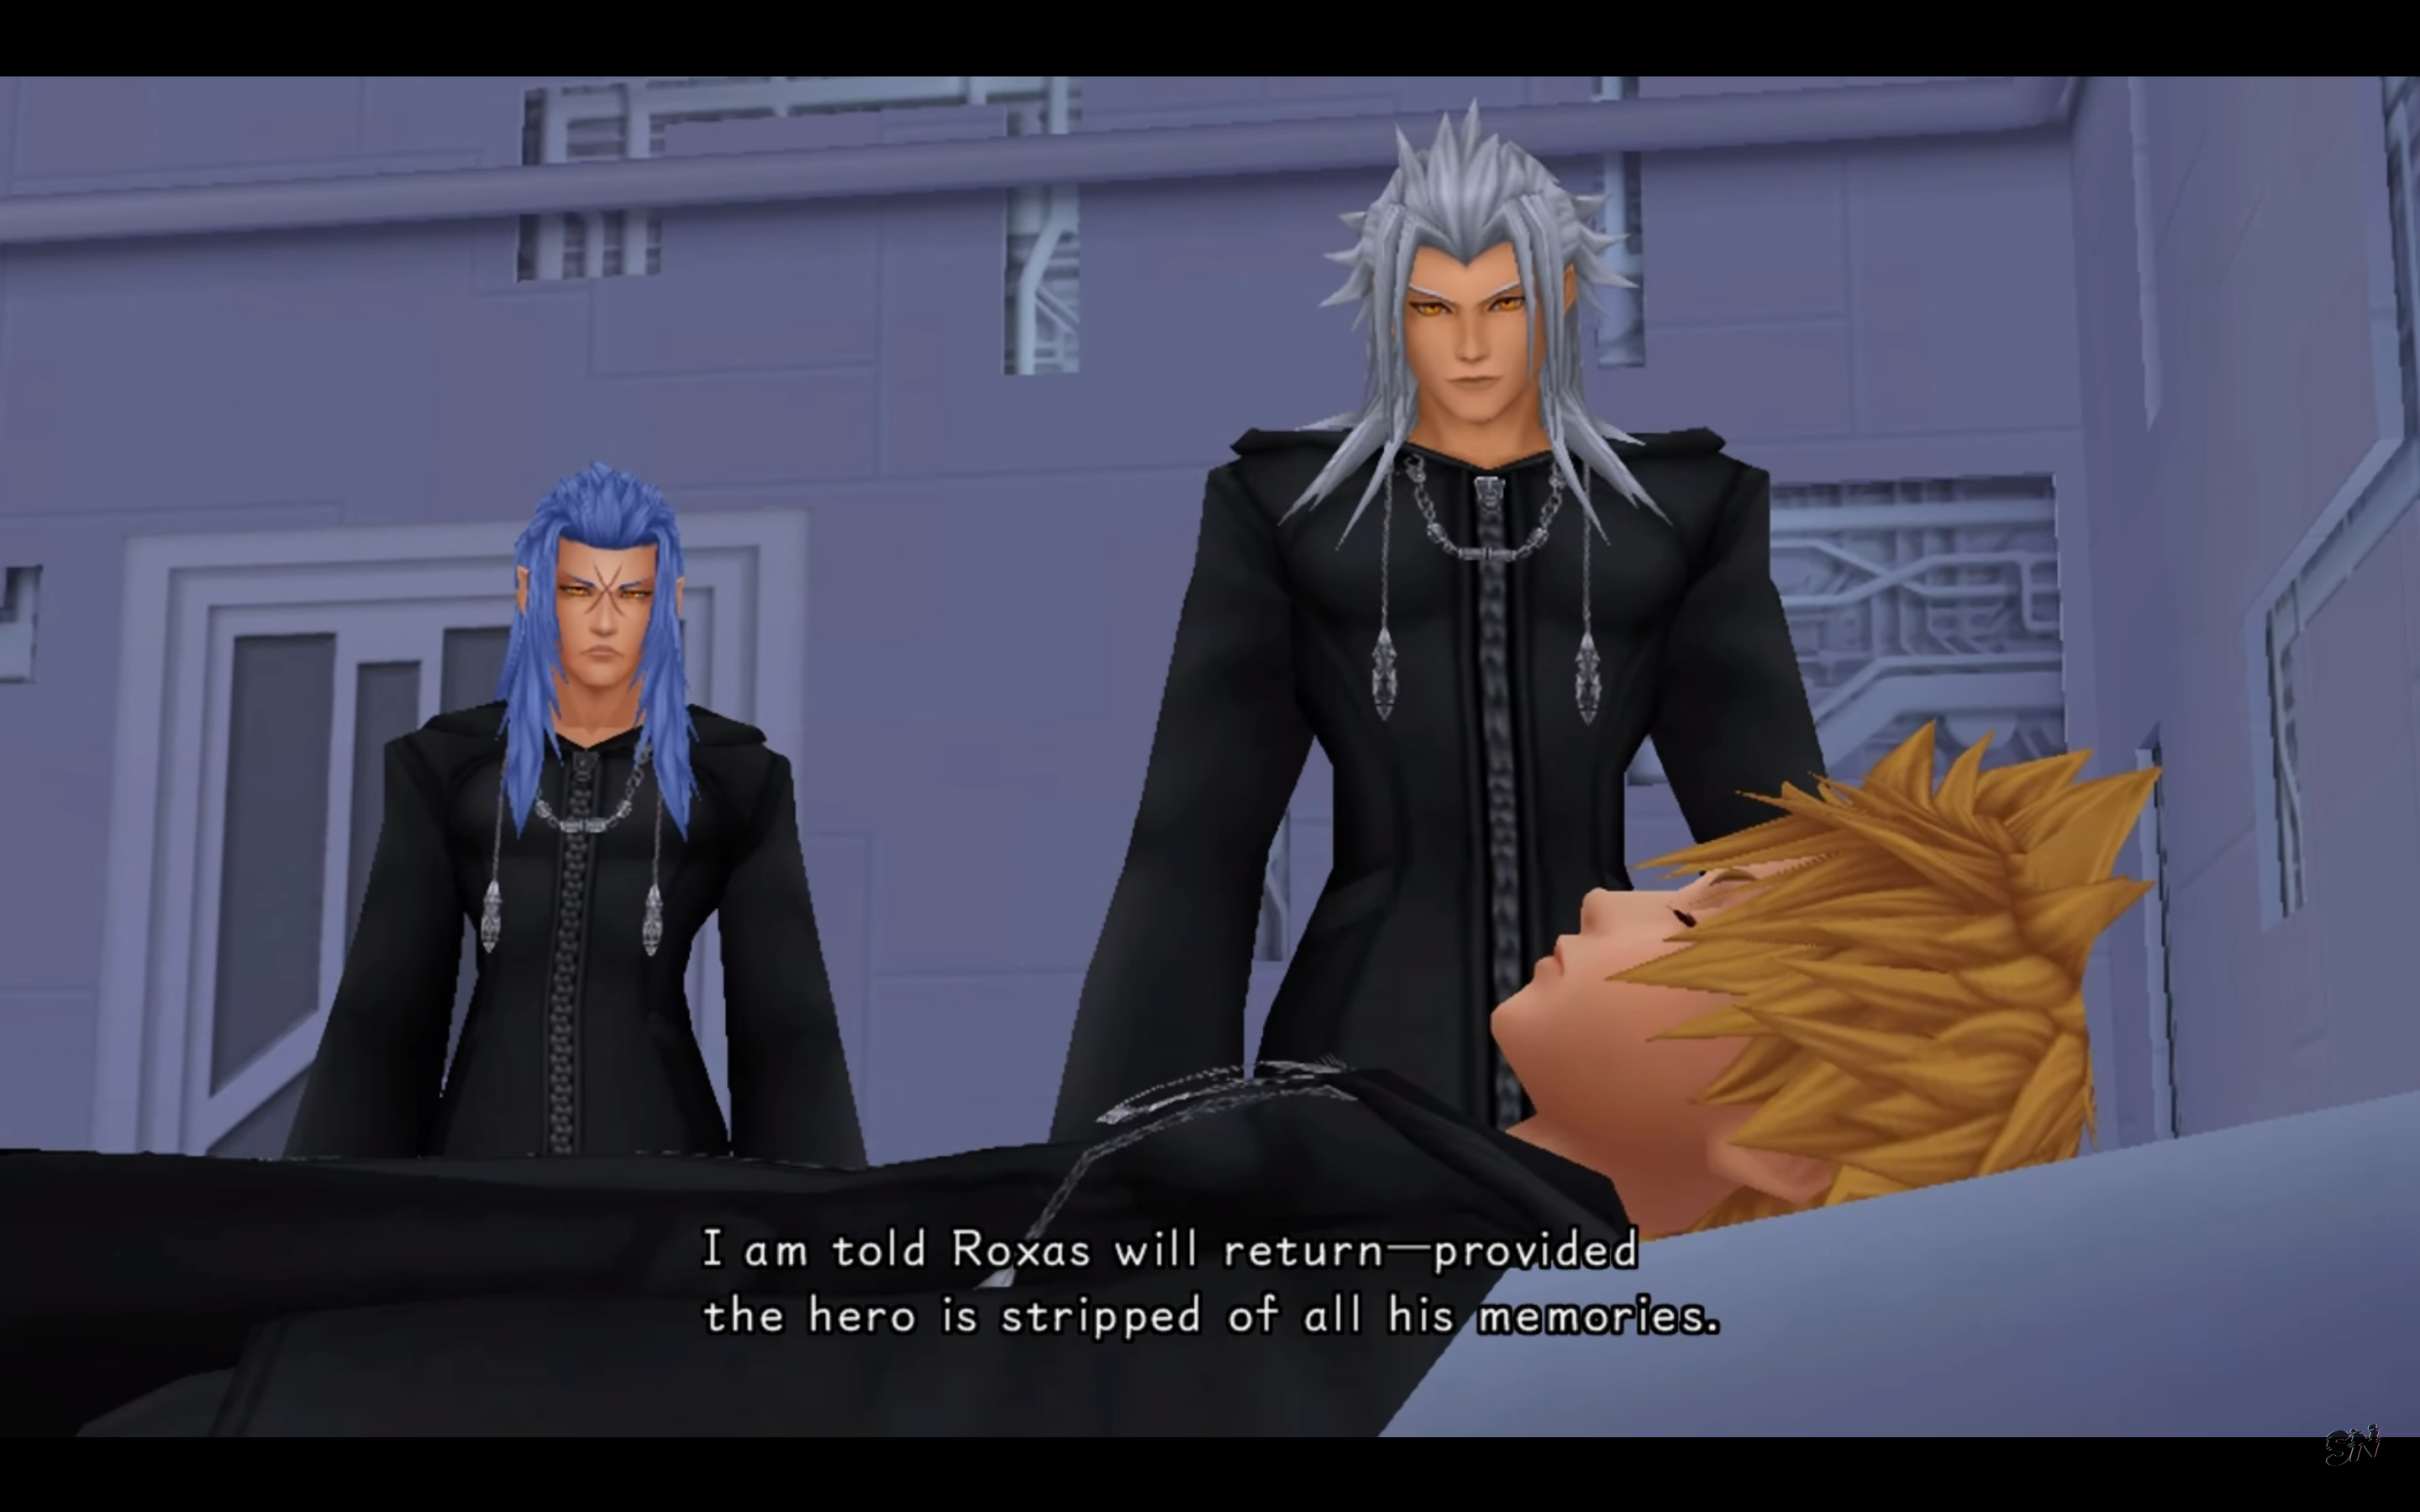 "Kingdom Hearts: 358/2 Days". 2009. Square Enix.
Saïx and Xemnas watching over a sleeping Roxas.